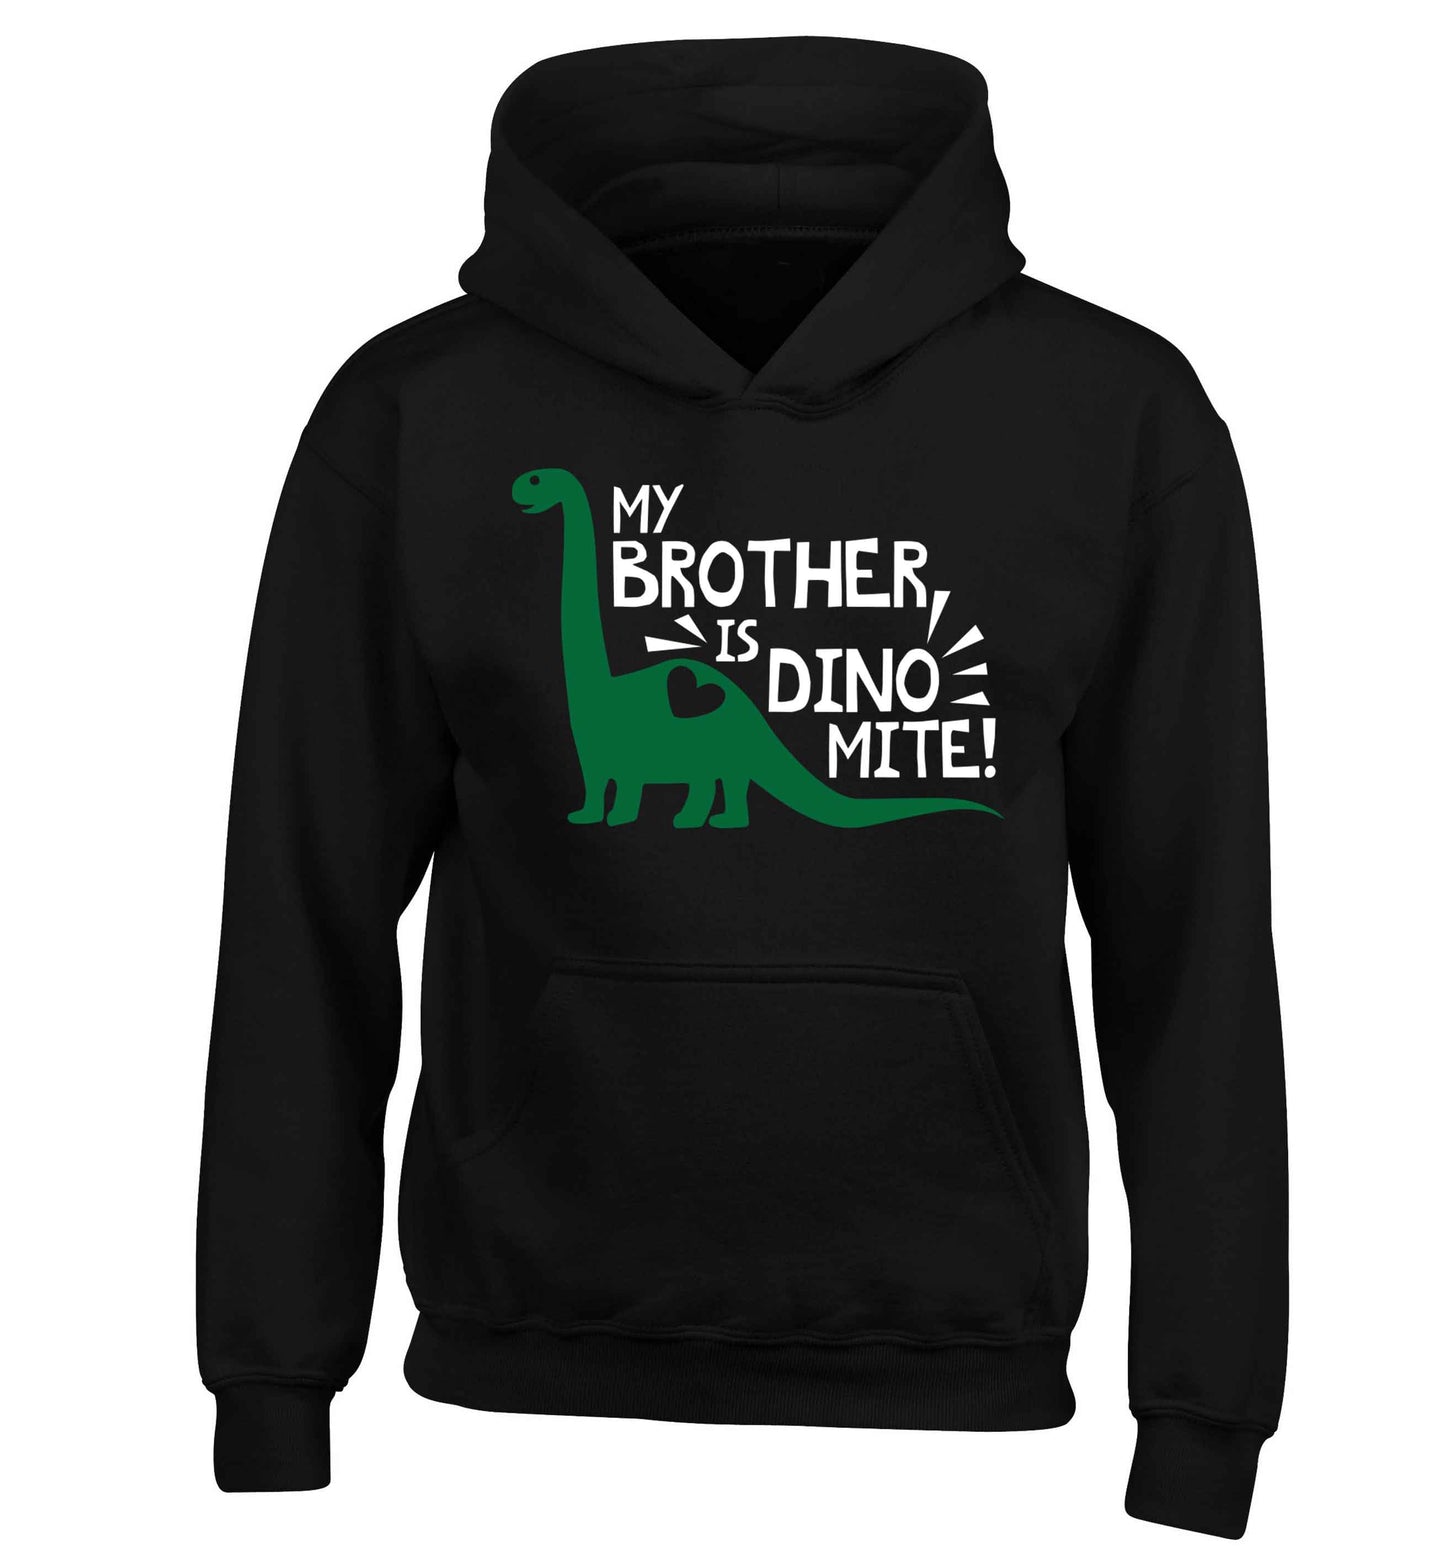 My brother is dinomite! children's black hoodie 12-13 Years